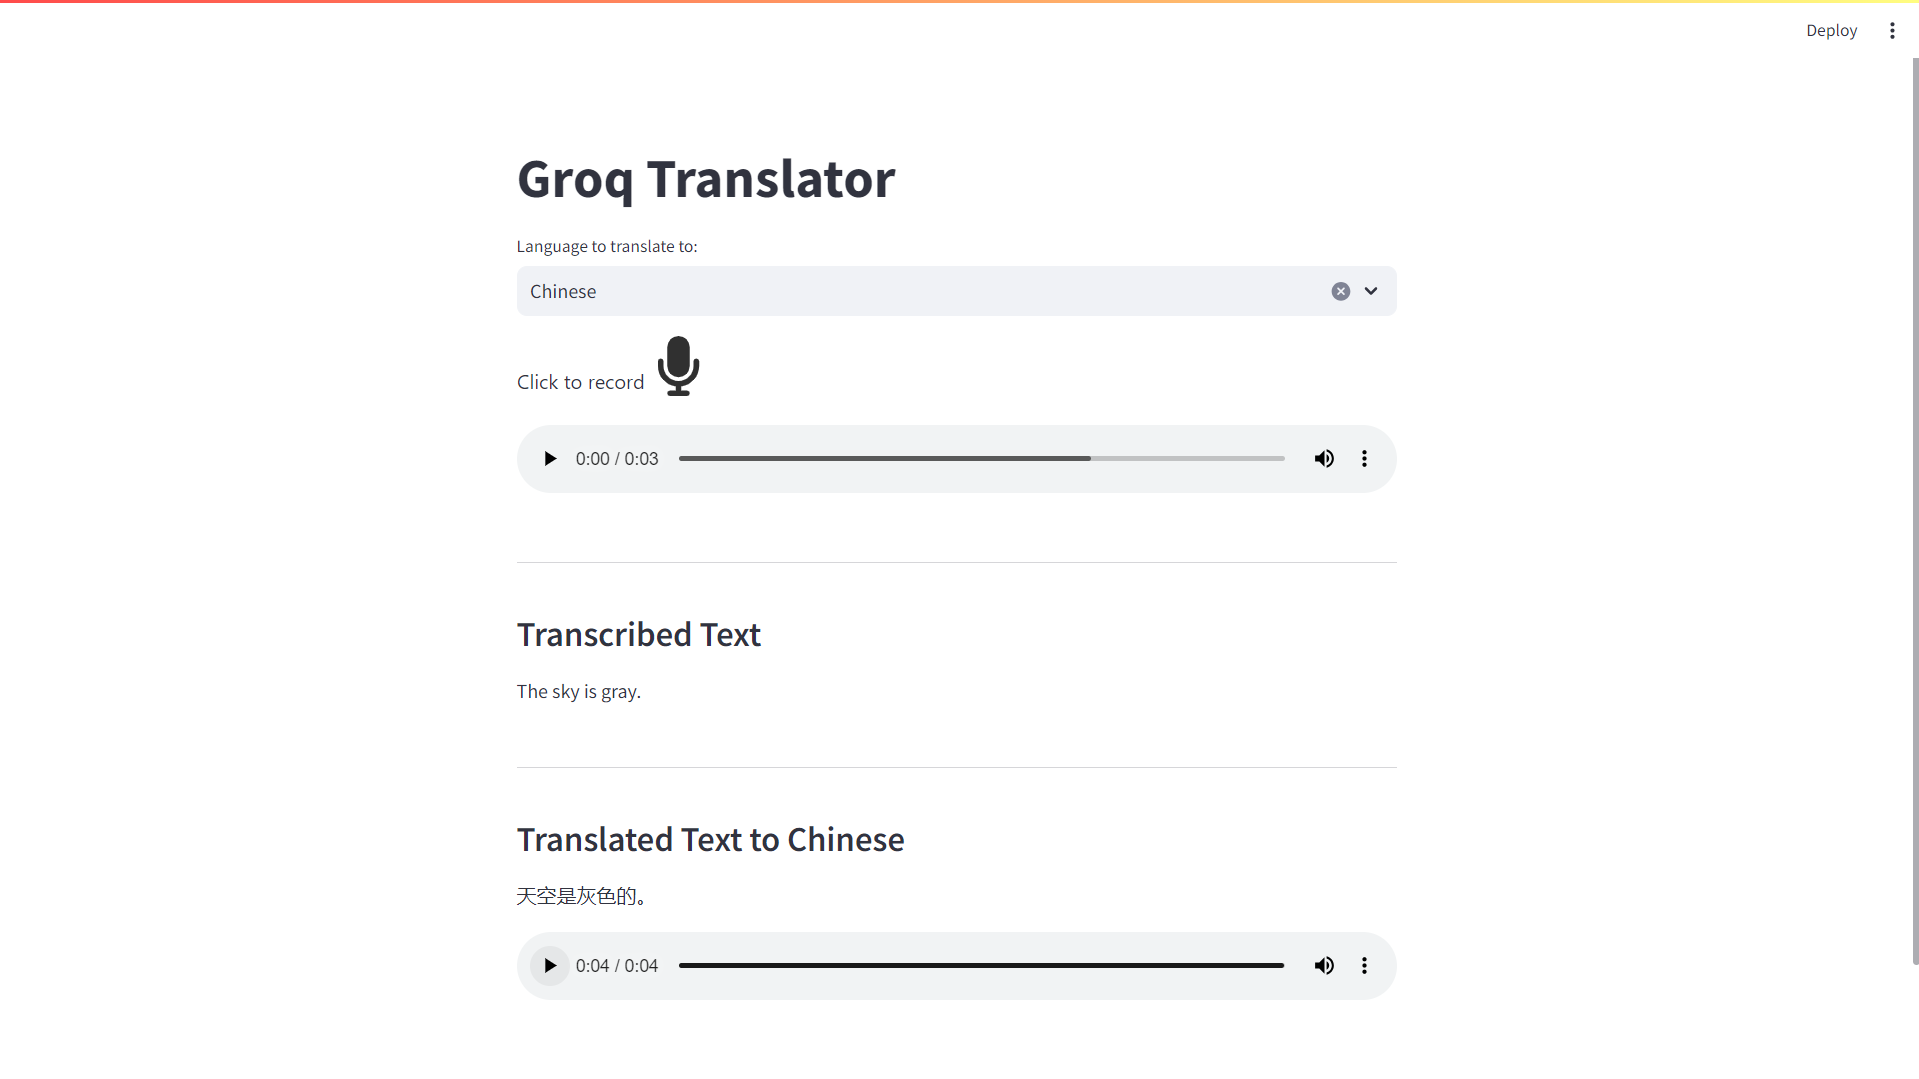 Translating to Chinese